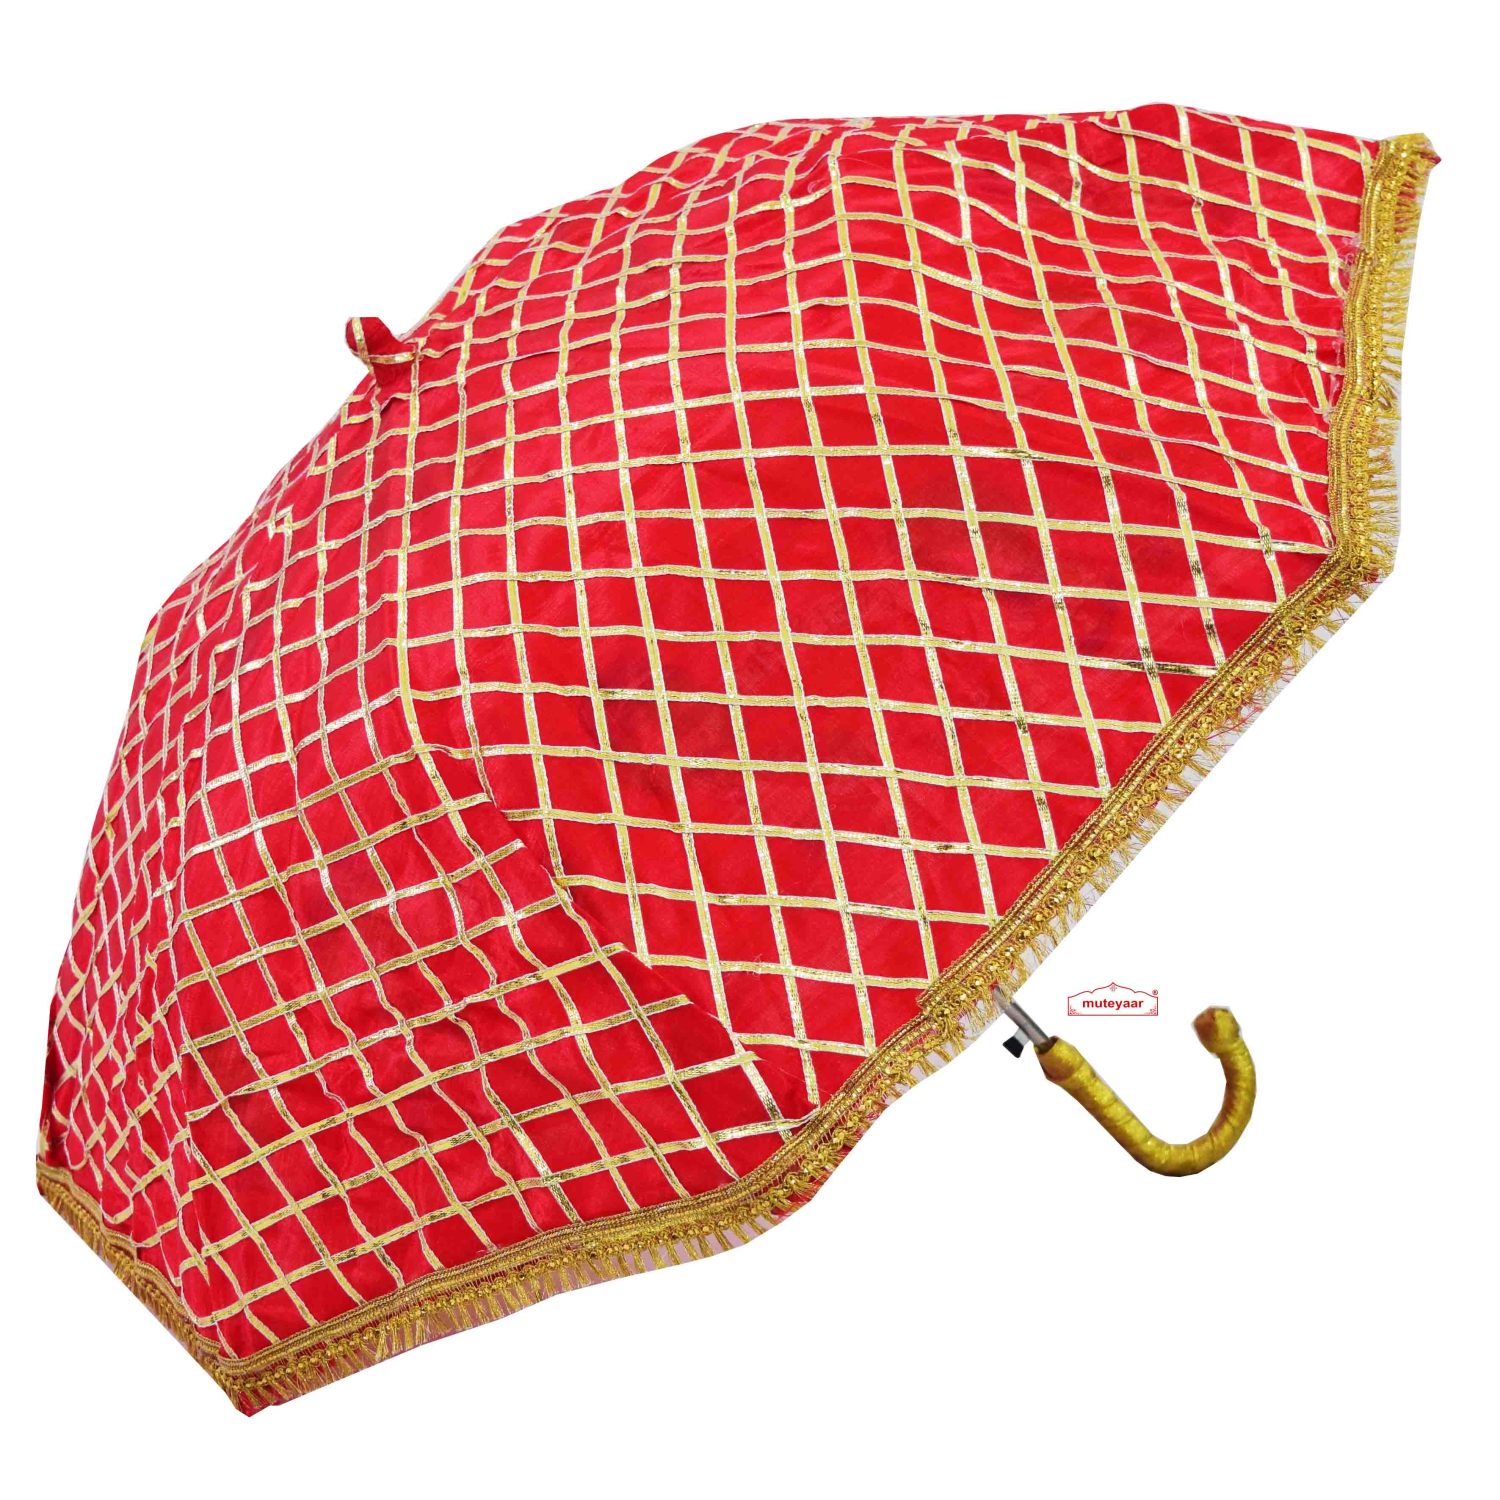 Red Umbrella Chhatri with Gotapatti work UMB16